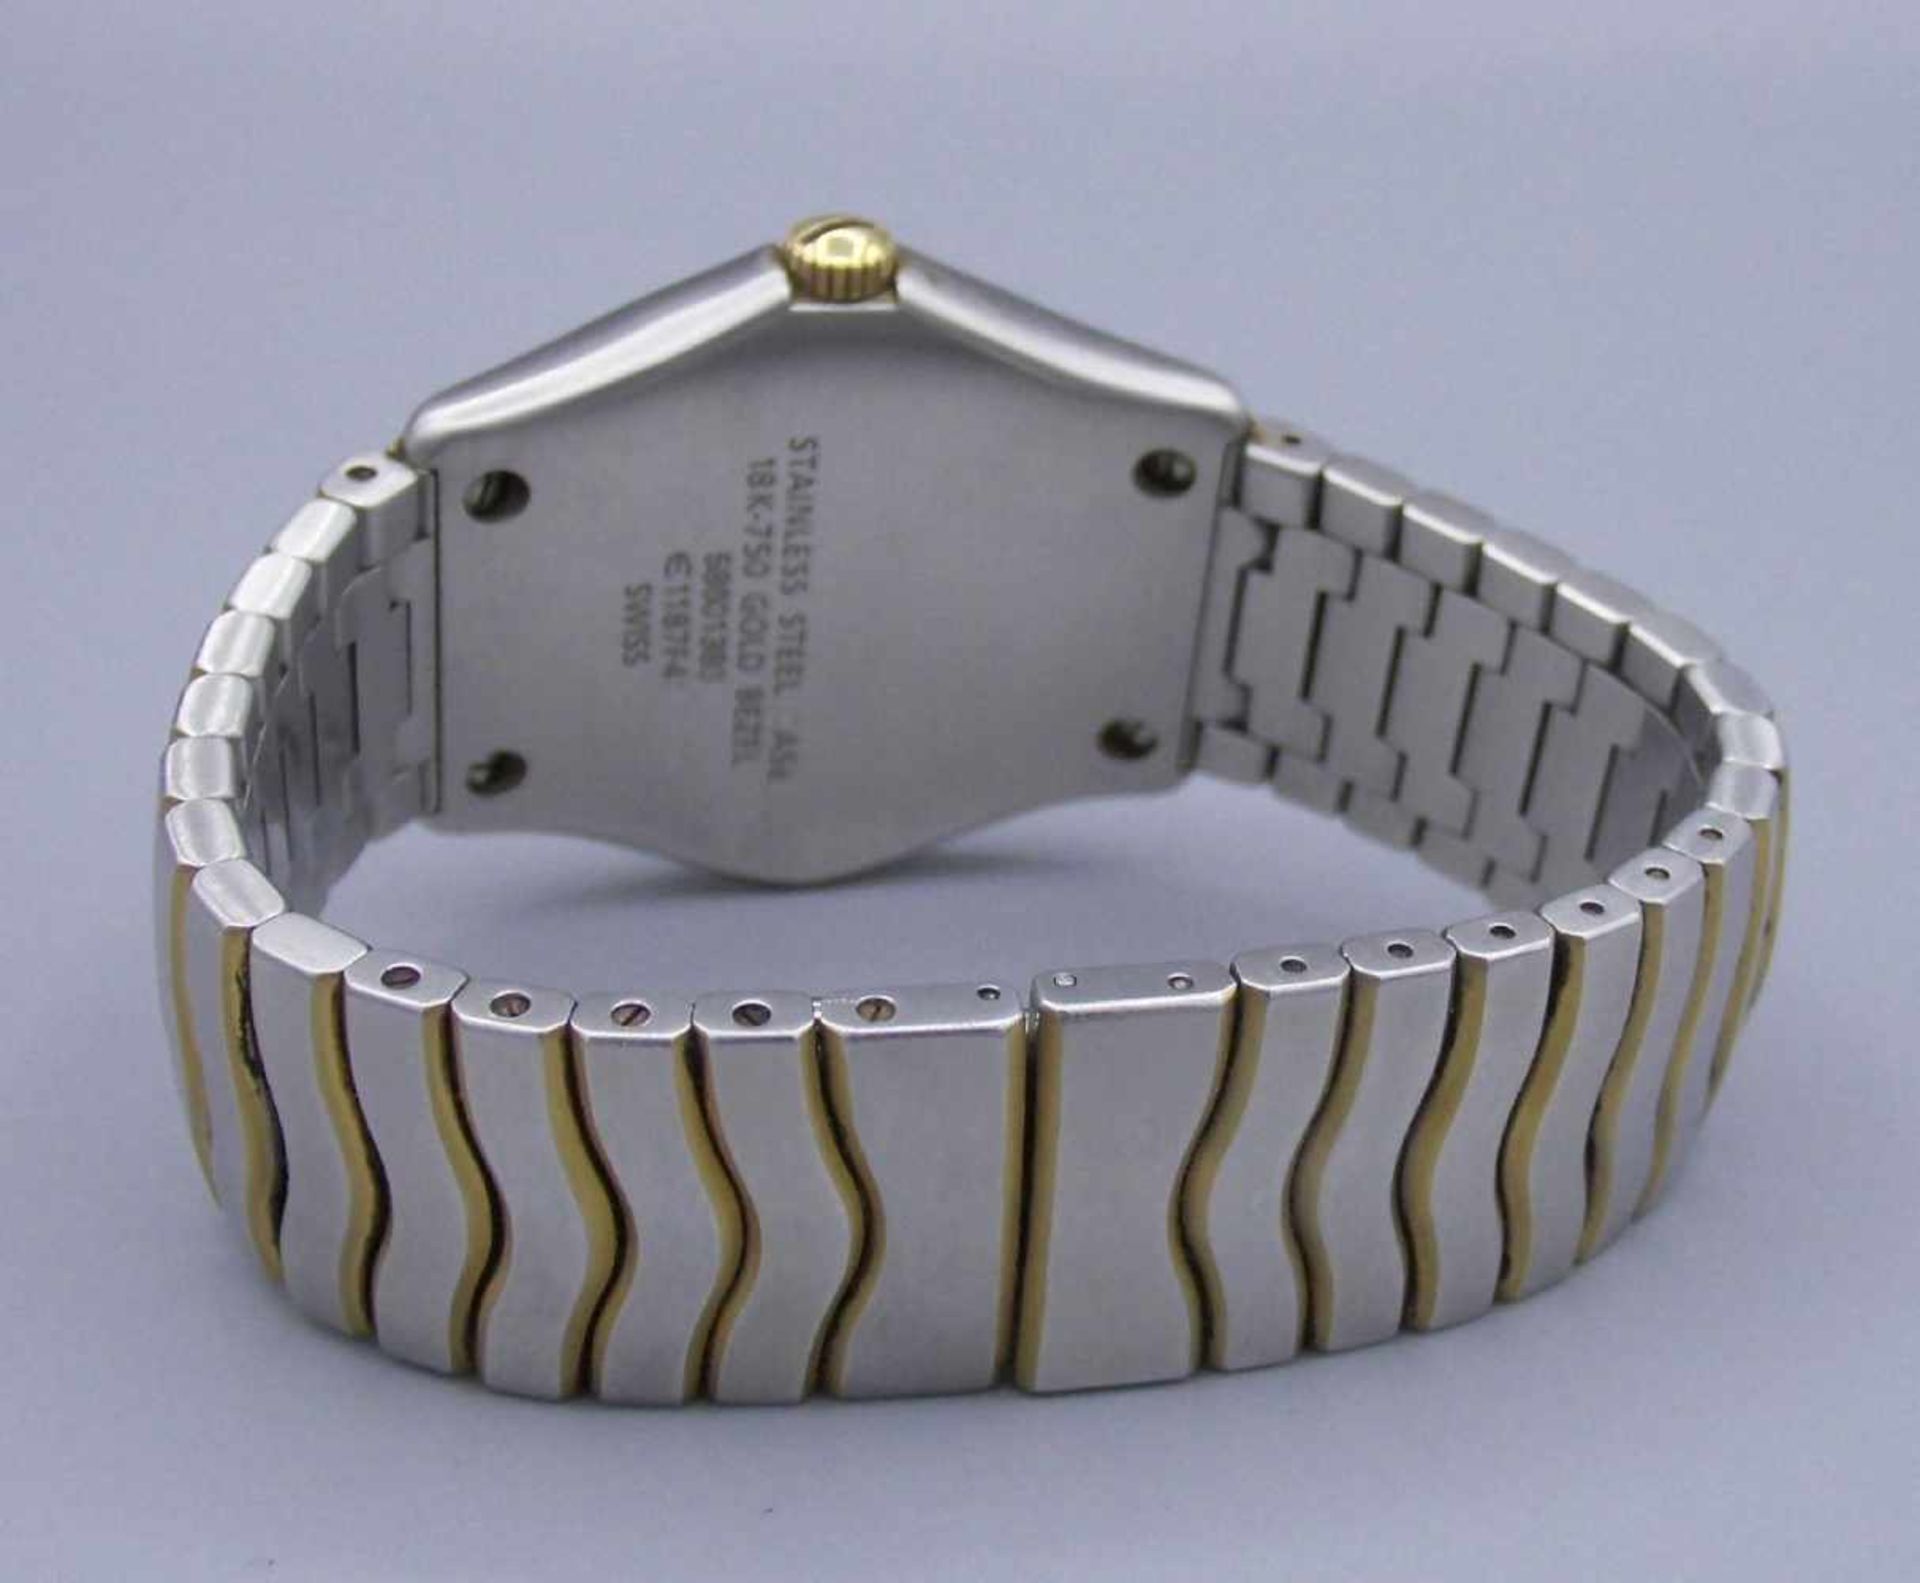 ARMBANDUHR EBEL "WAVE" / wristwatch, Armbanduhr in Stahl/Gold (750er Gold), Schweiz 2006, Quartz, - Image 3 of 7